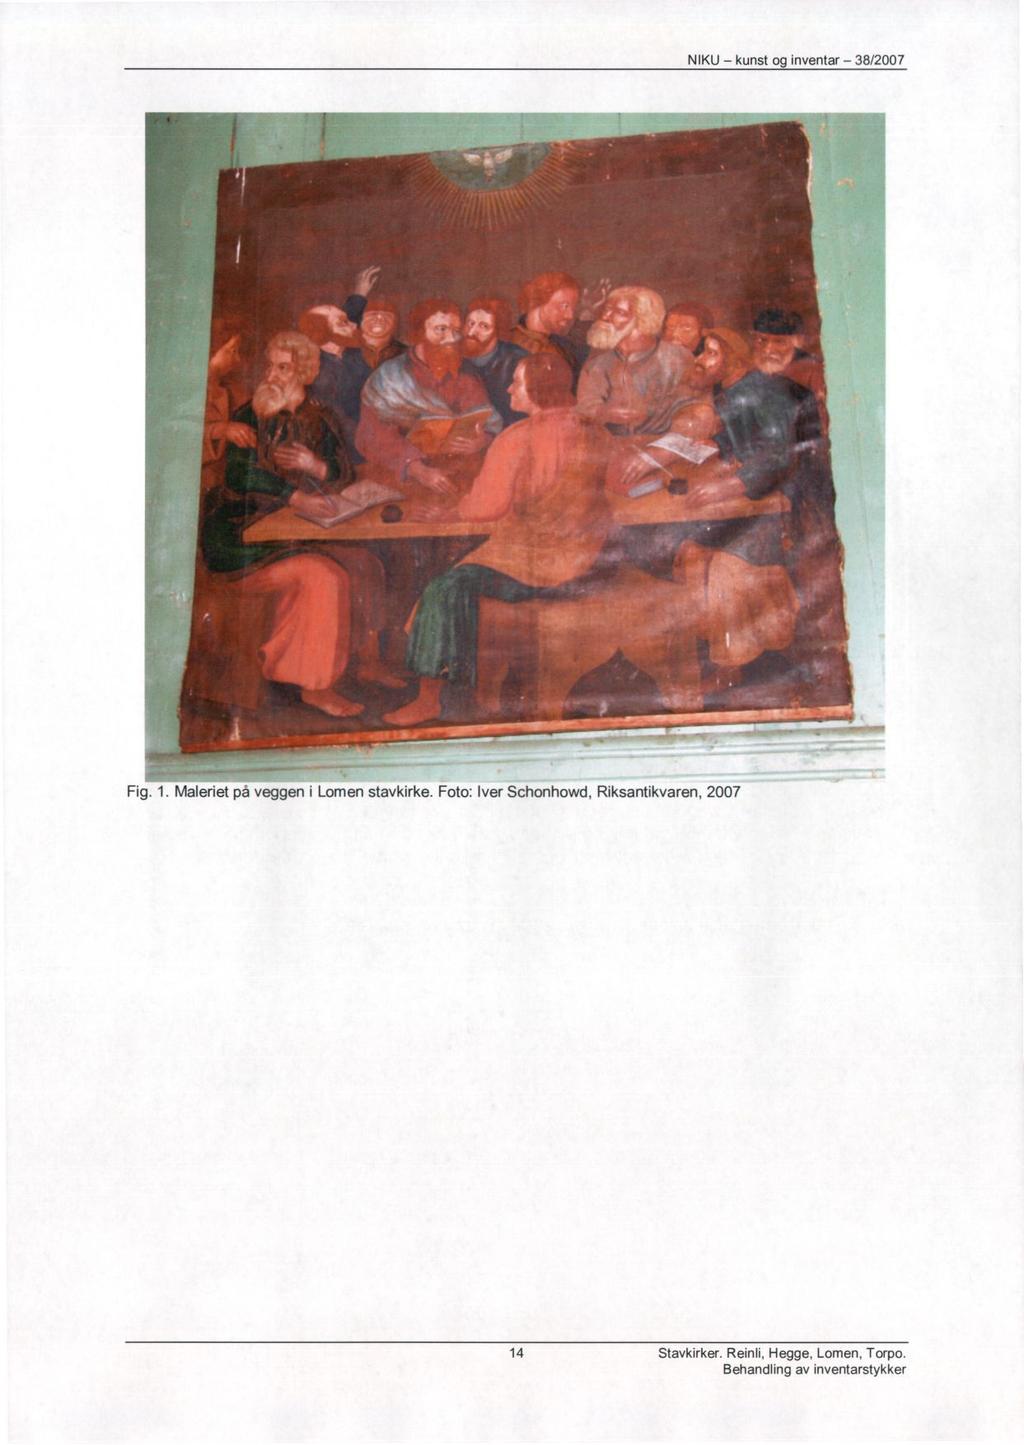 NIKU - kunst og inventar - 38/2007 at Fig. 1. Maleriet pa veggen i Lomen stavkirke.